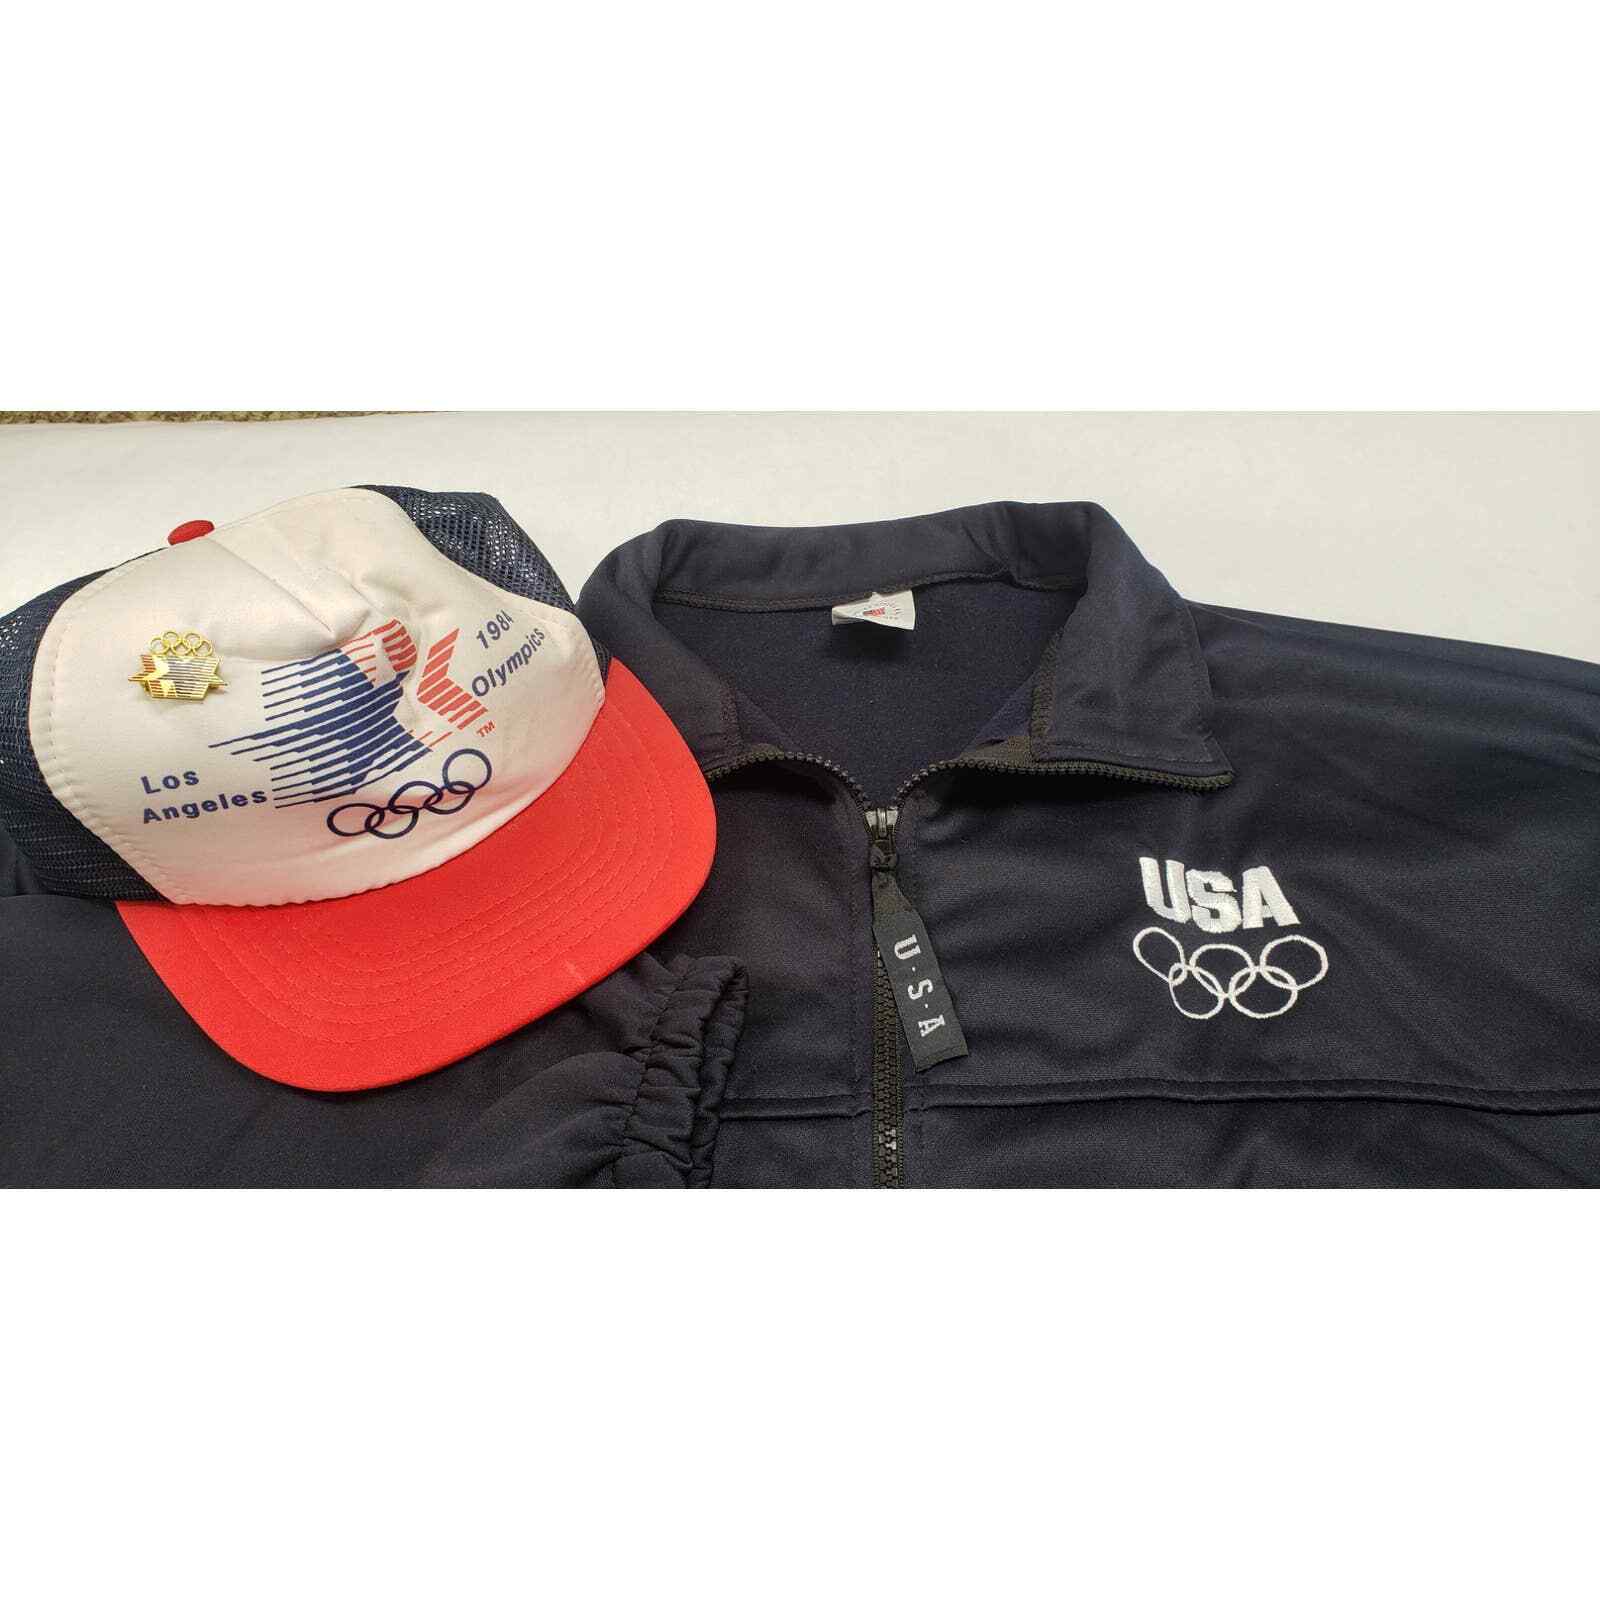 1984 Los Angeles Olympics official full zip coat trucker hat Olympic pin